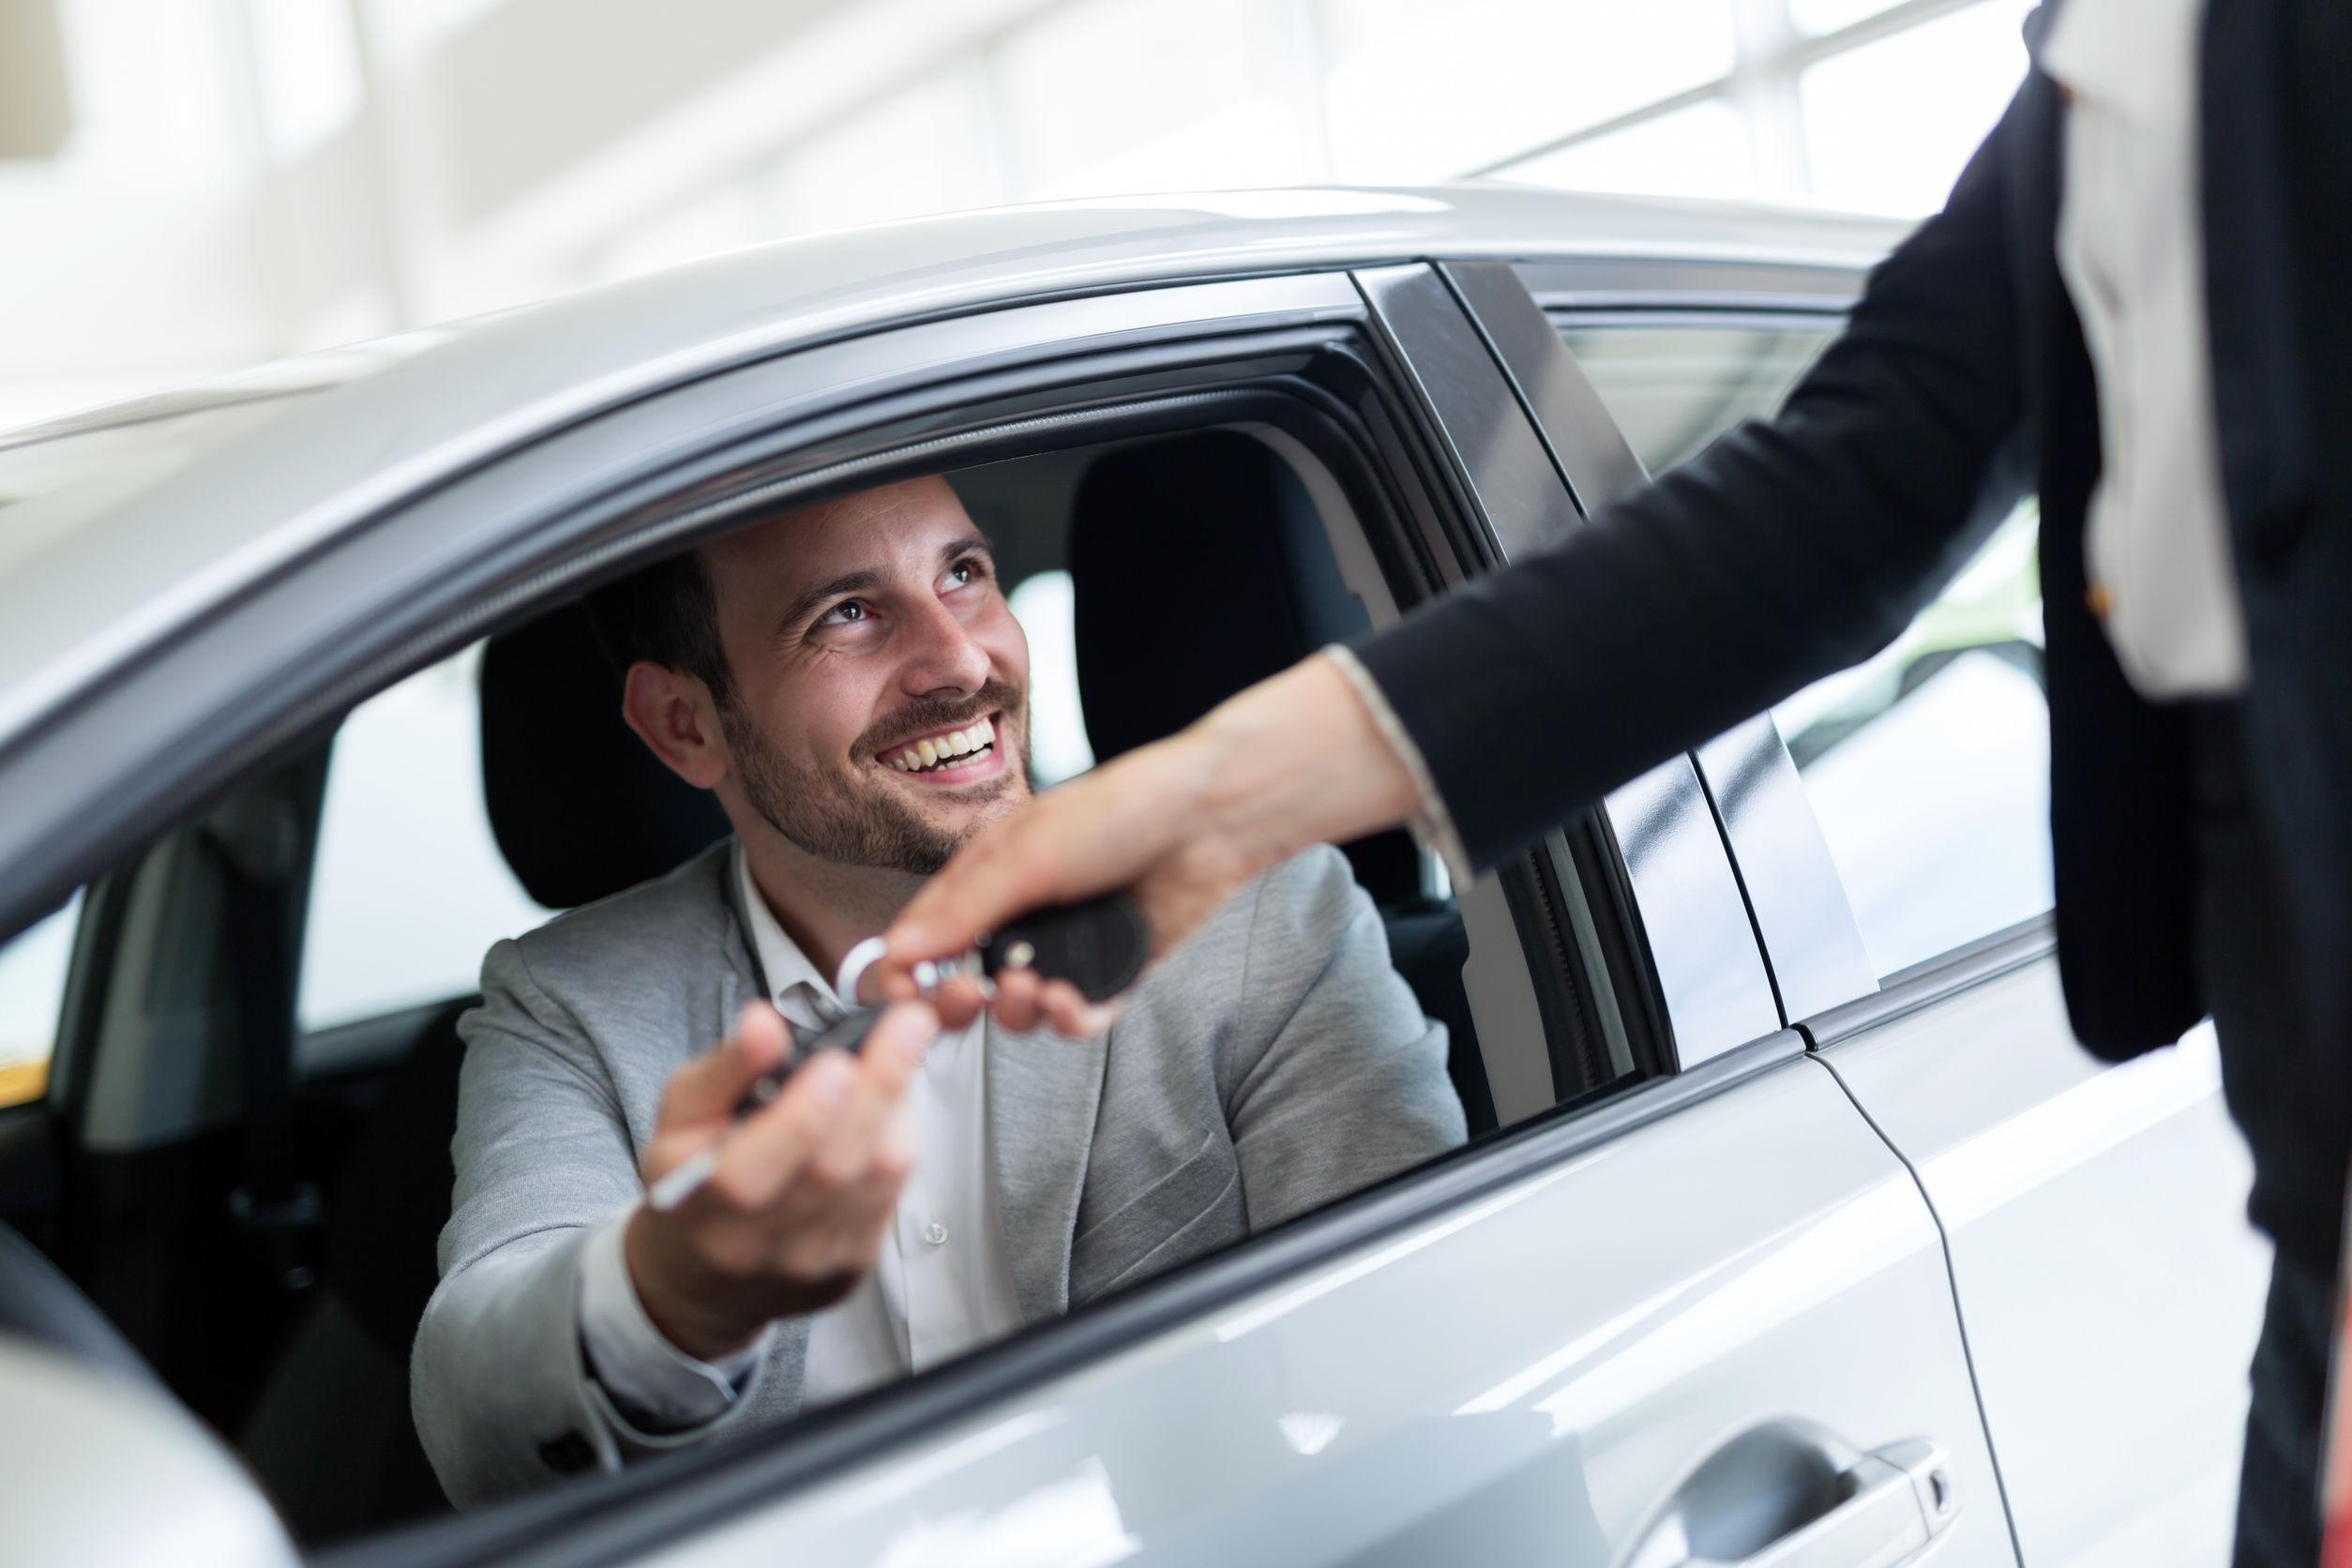 Assicurazione di un’auto a noleggio: quali garanzie utili aggiungere?